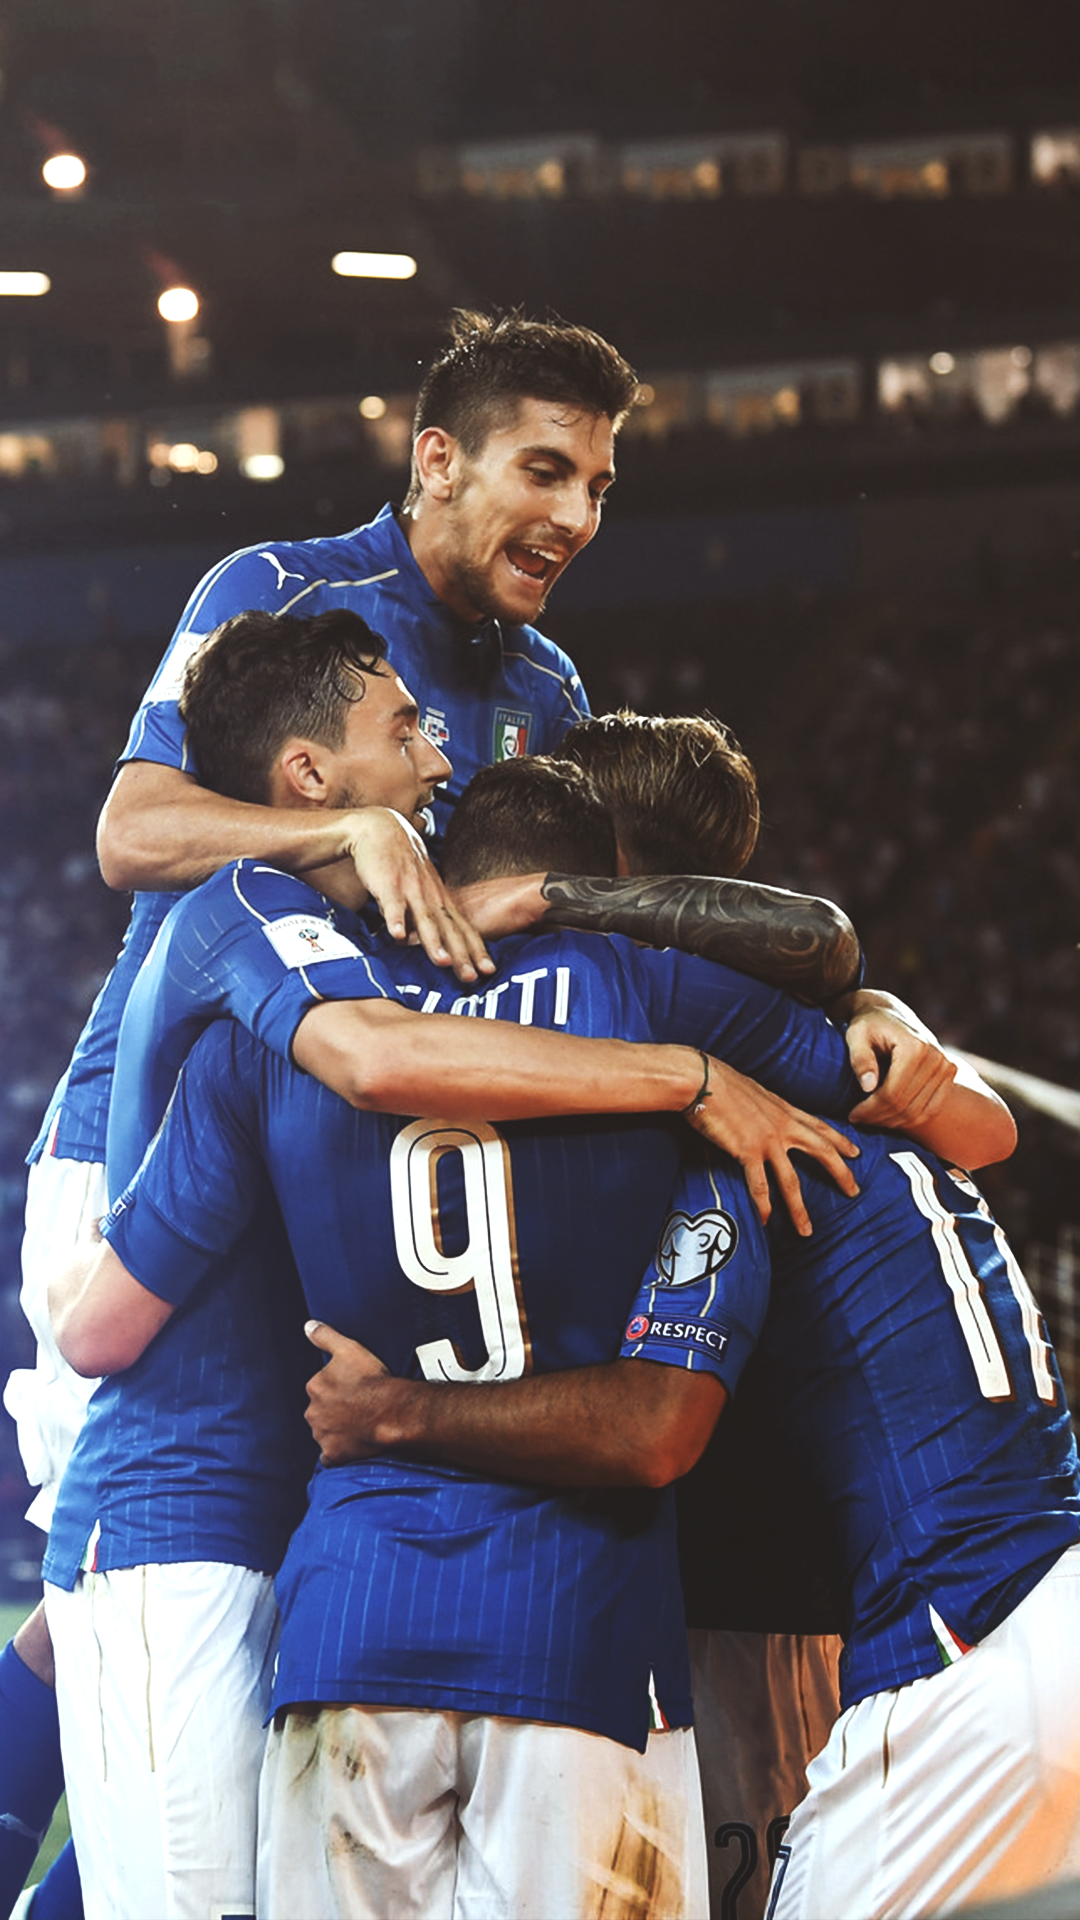 FootballHQ Squadra Nazionale Italia. Italy National Team, calcio, football, azzurri. Football wallpaper, Football team, Football